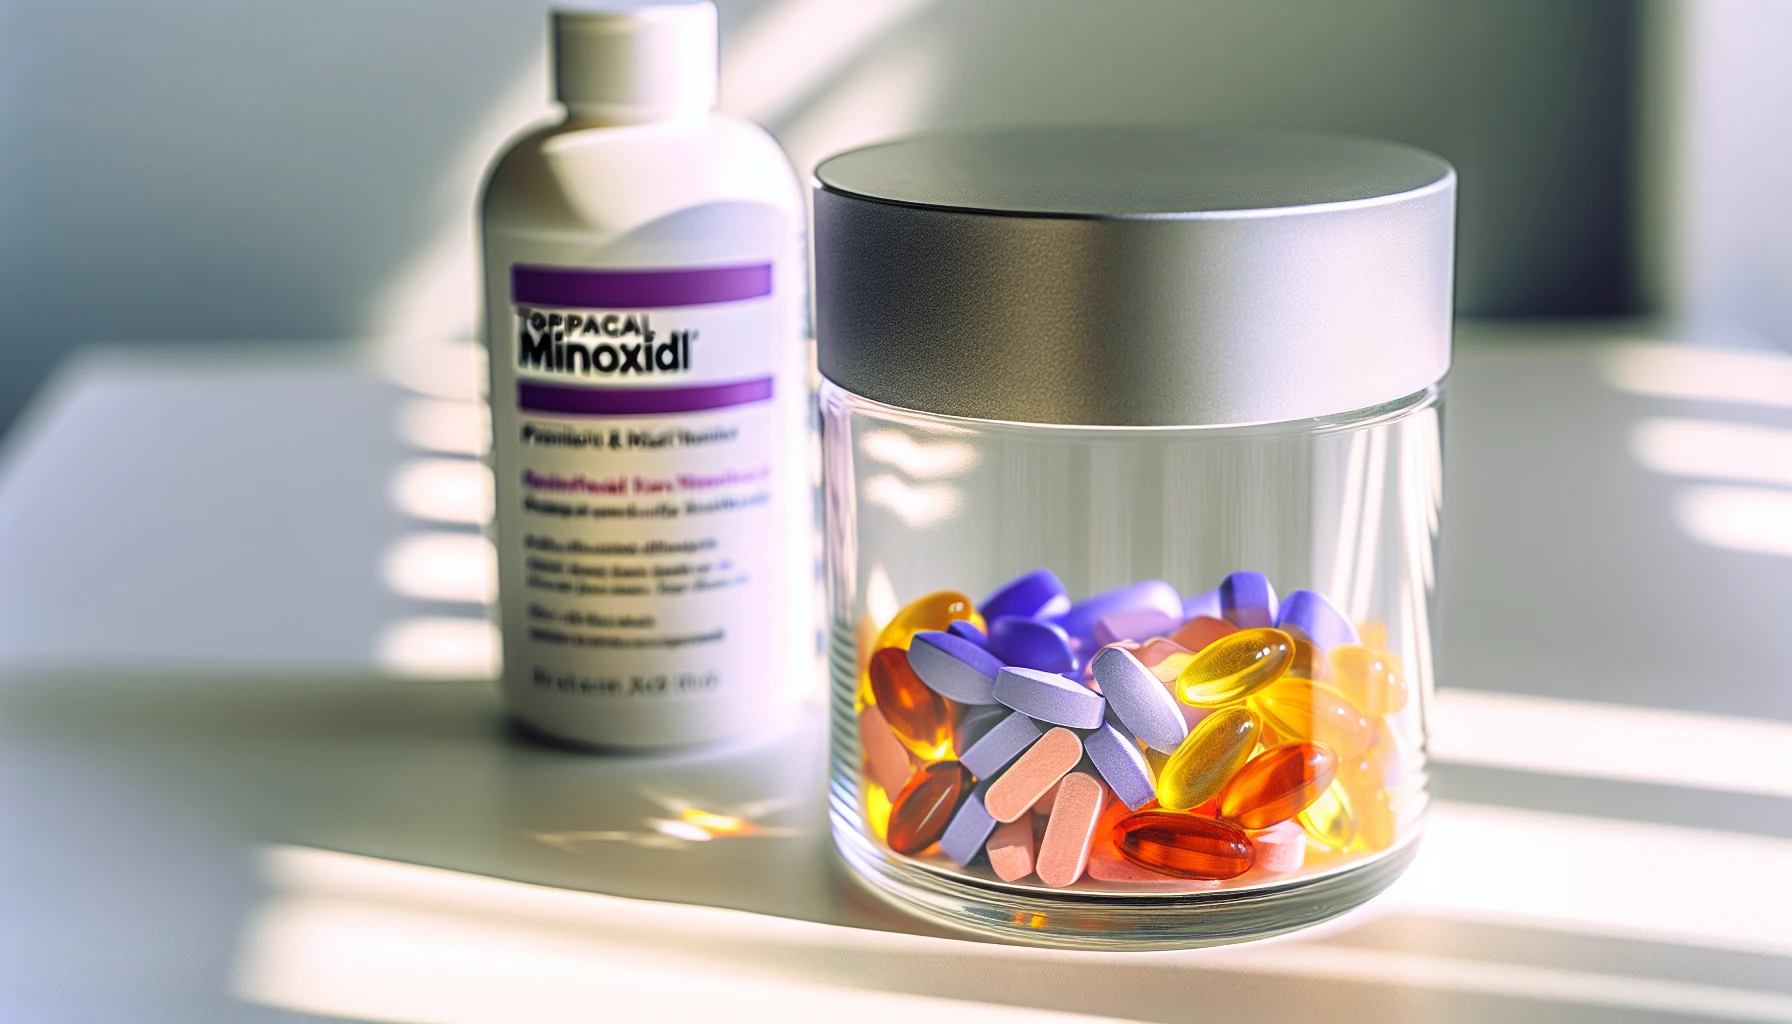 Photo of prenatal vitamins and topical minoxidil for postpartum hair loss treatment